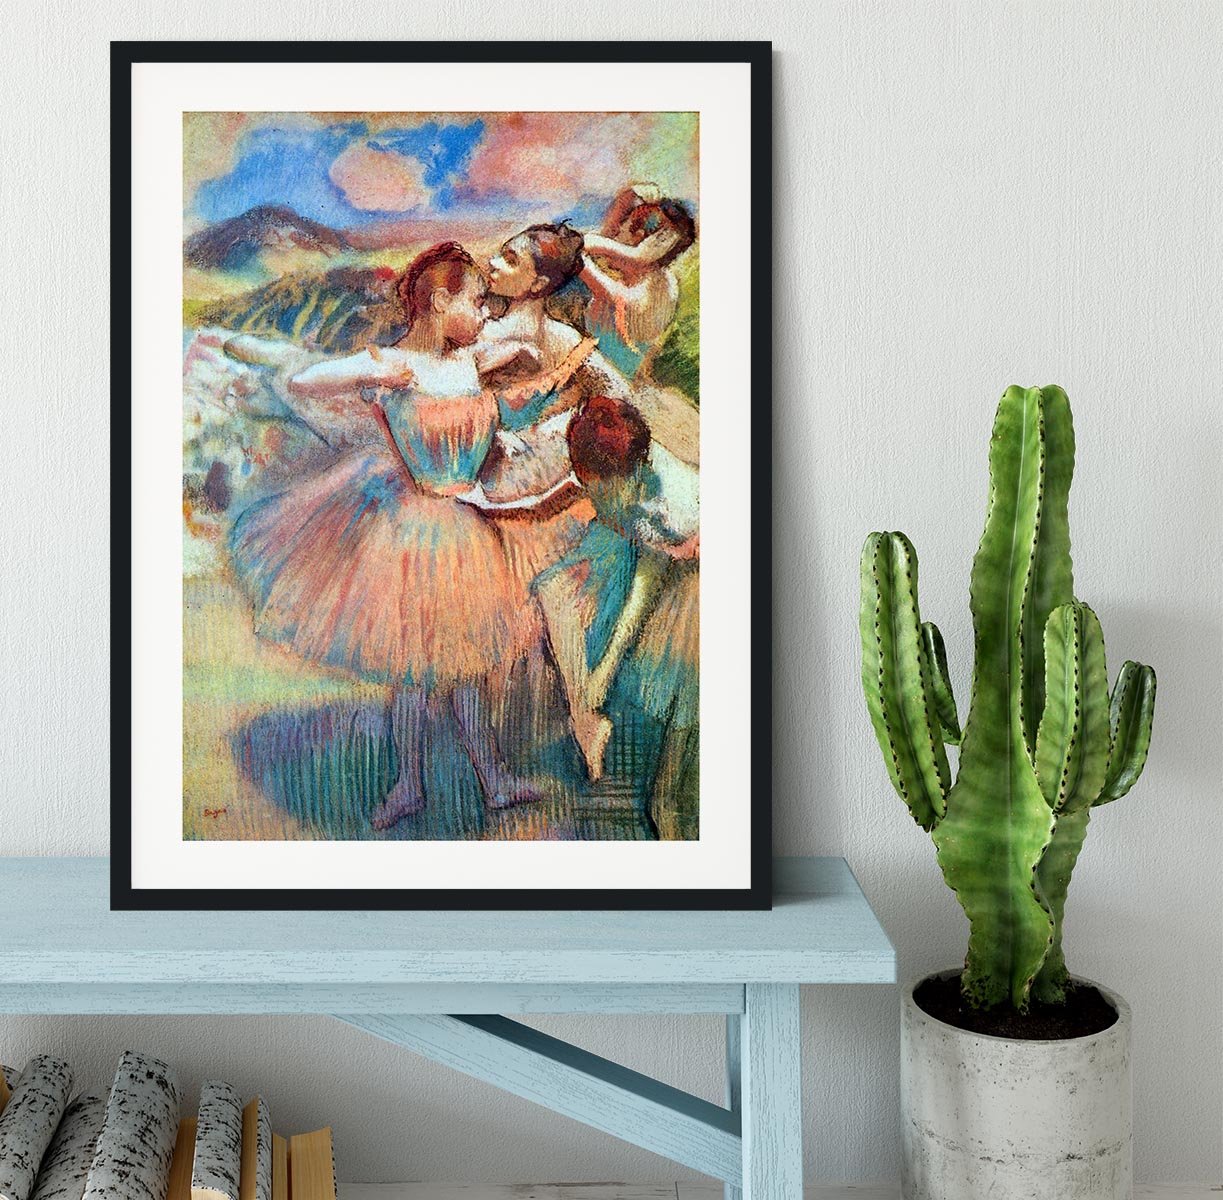 Dancers in the landscape by Degas Framed Print - Canvas Art Rocks - 1